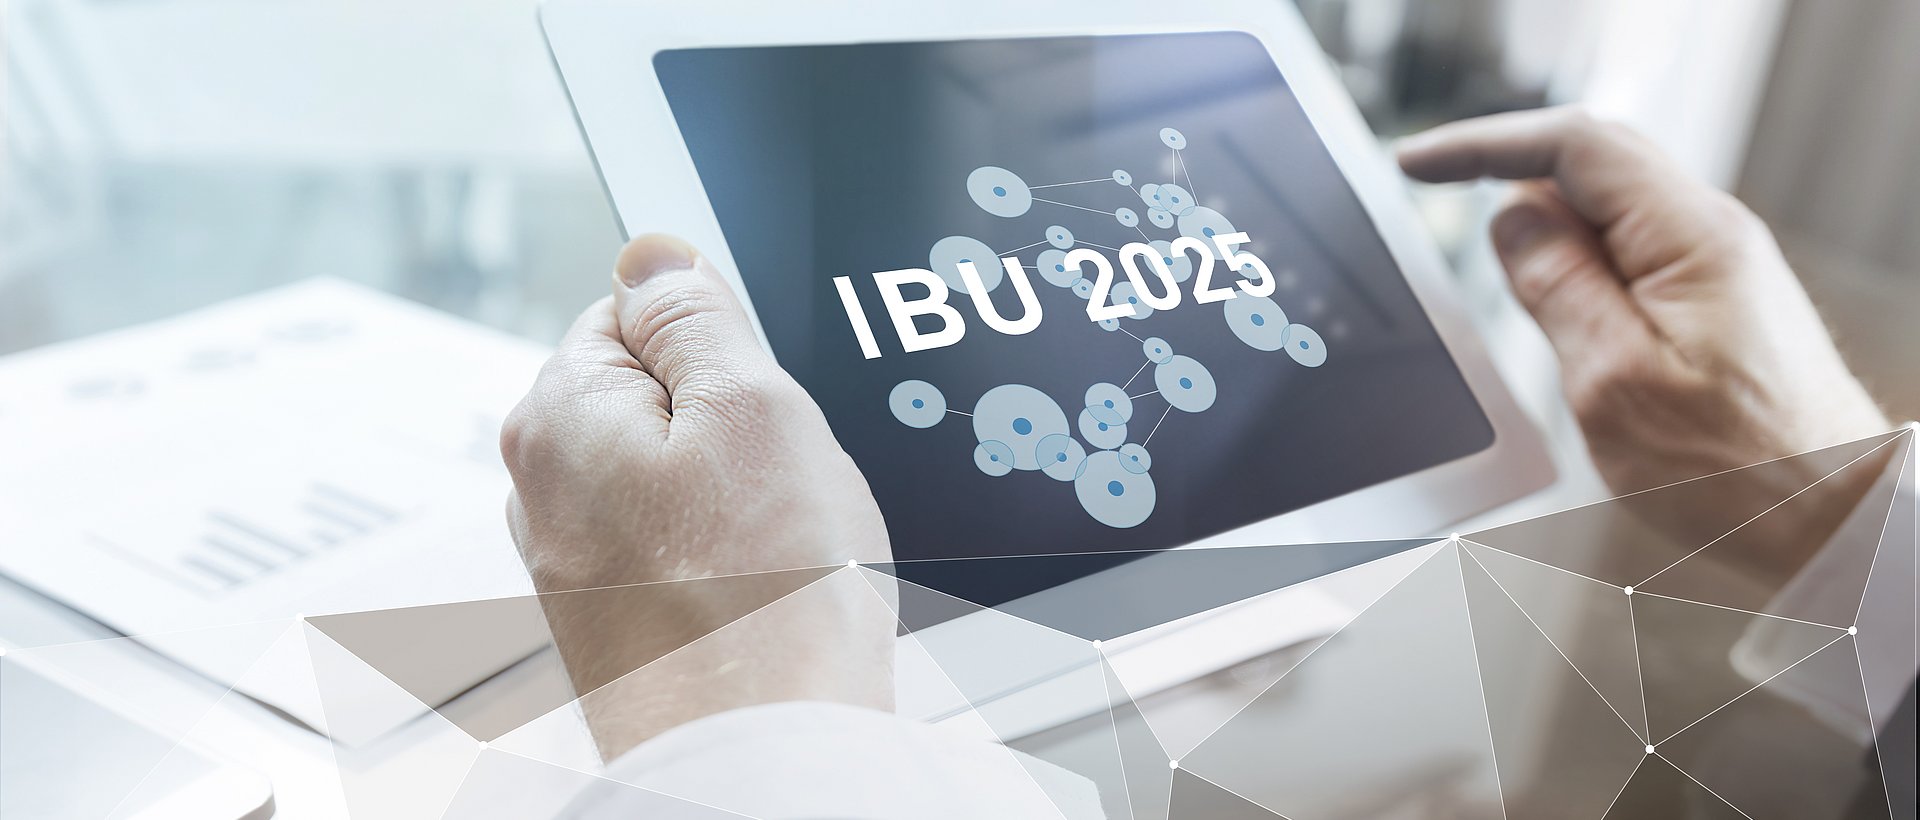 IBU-tec Plan 2020 Tablet für Investor Relations